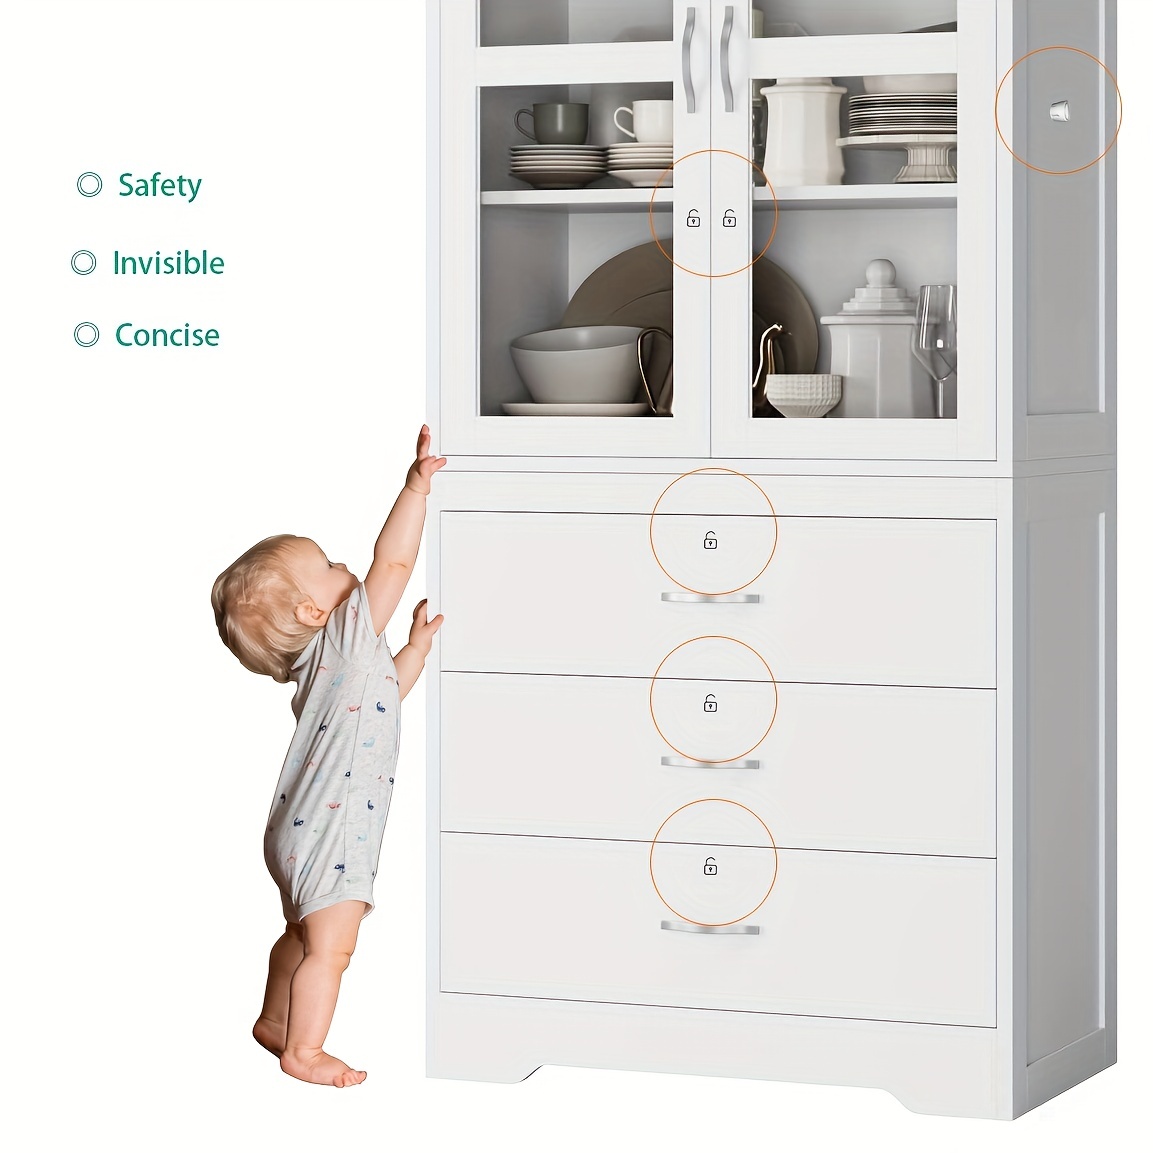 Dww-baby Safety Cupboard Door Stopper (8 Locks + 2 Keys), Drawer